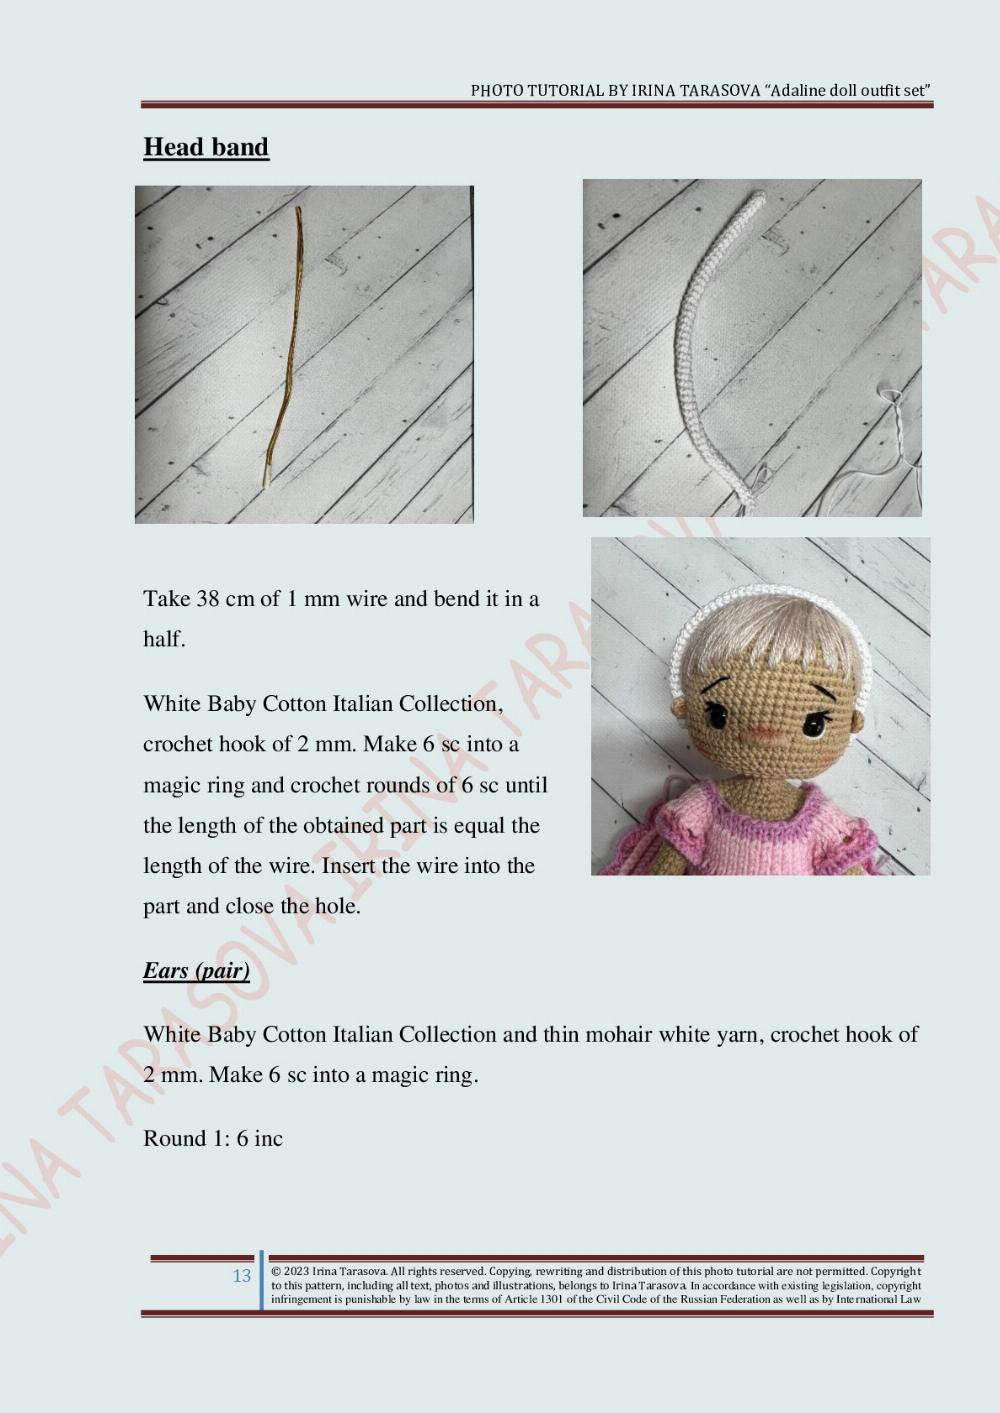 Adaline doll outfit set crochet pattern